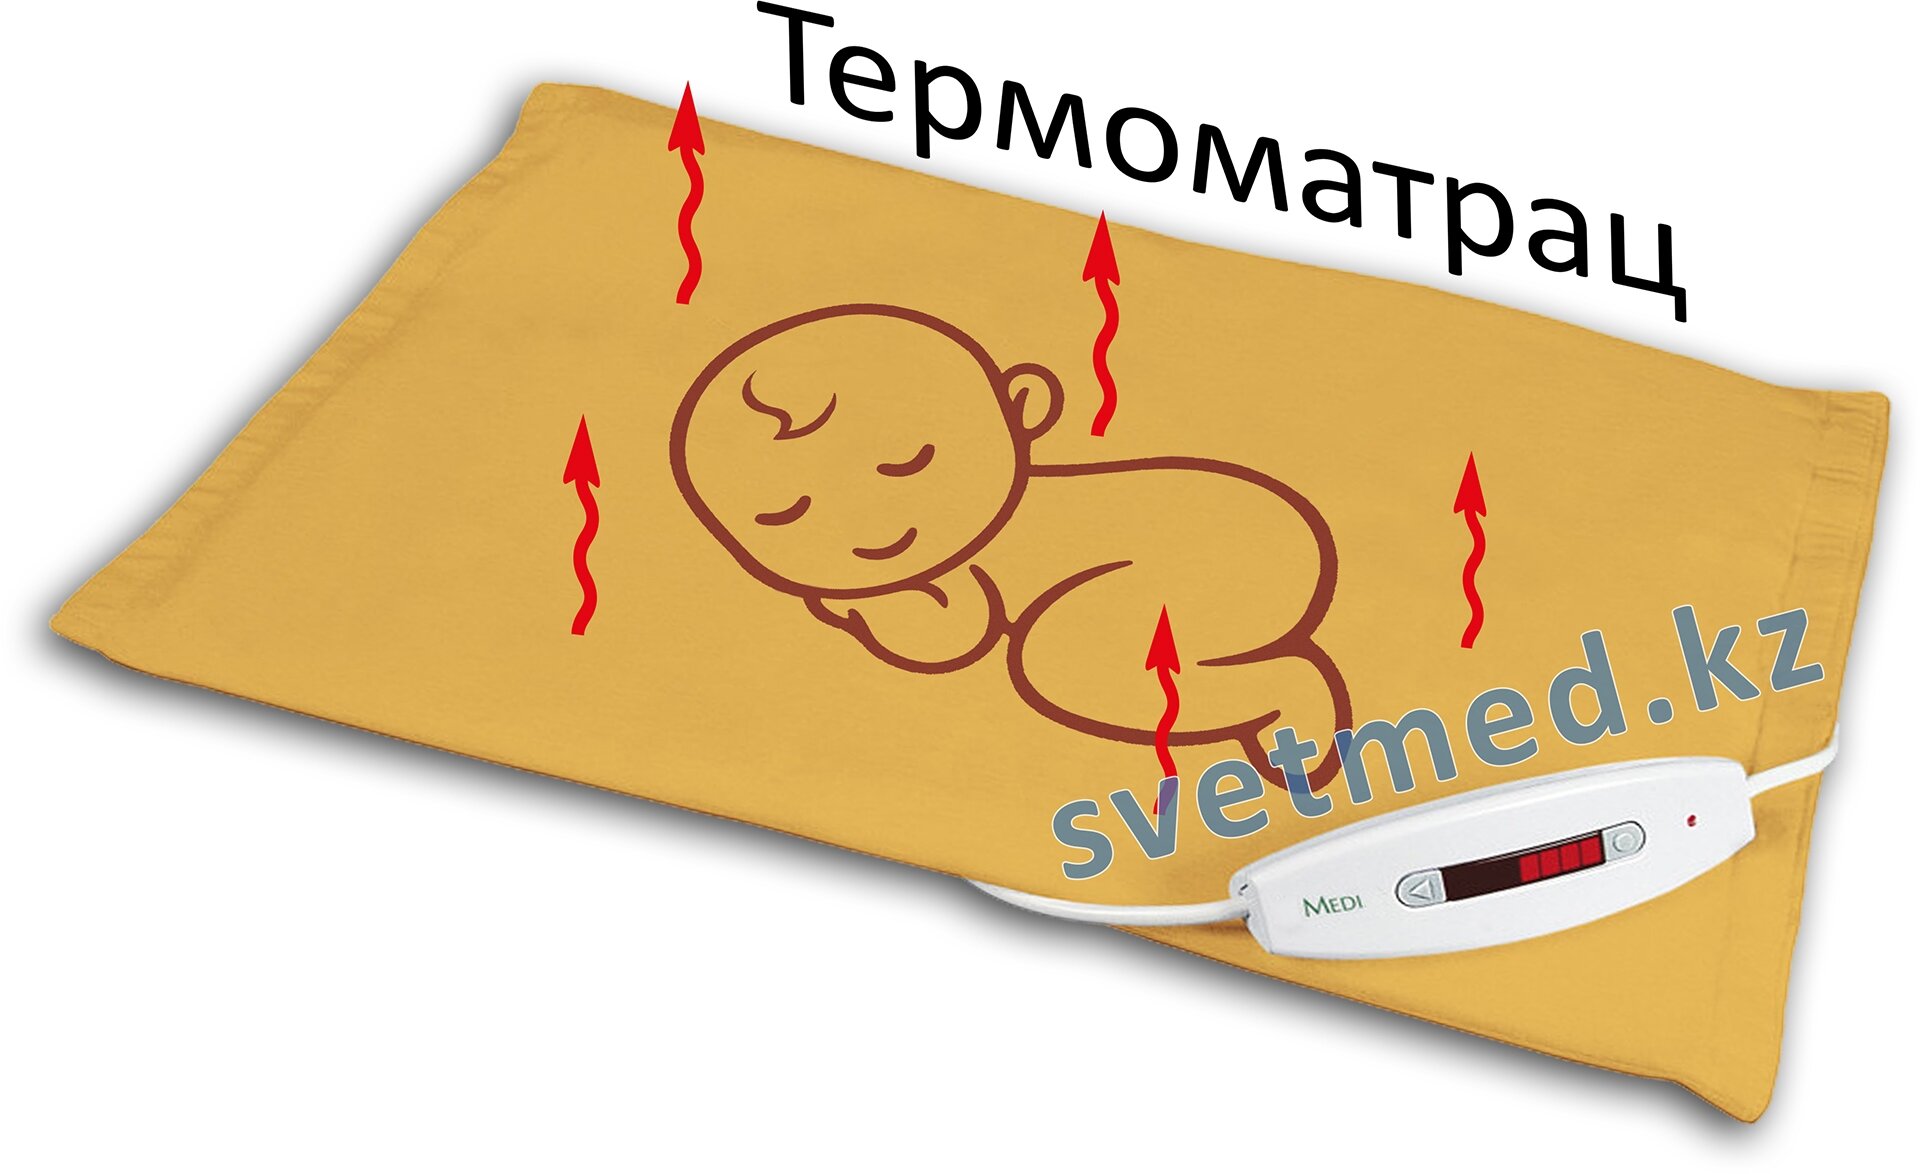 Термоматрац для обогрева младенца